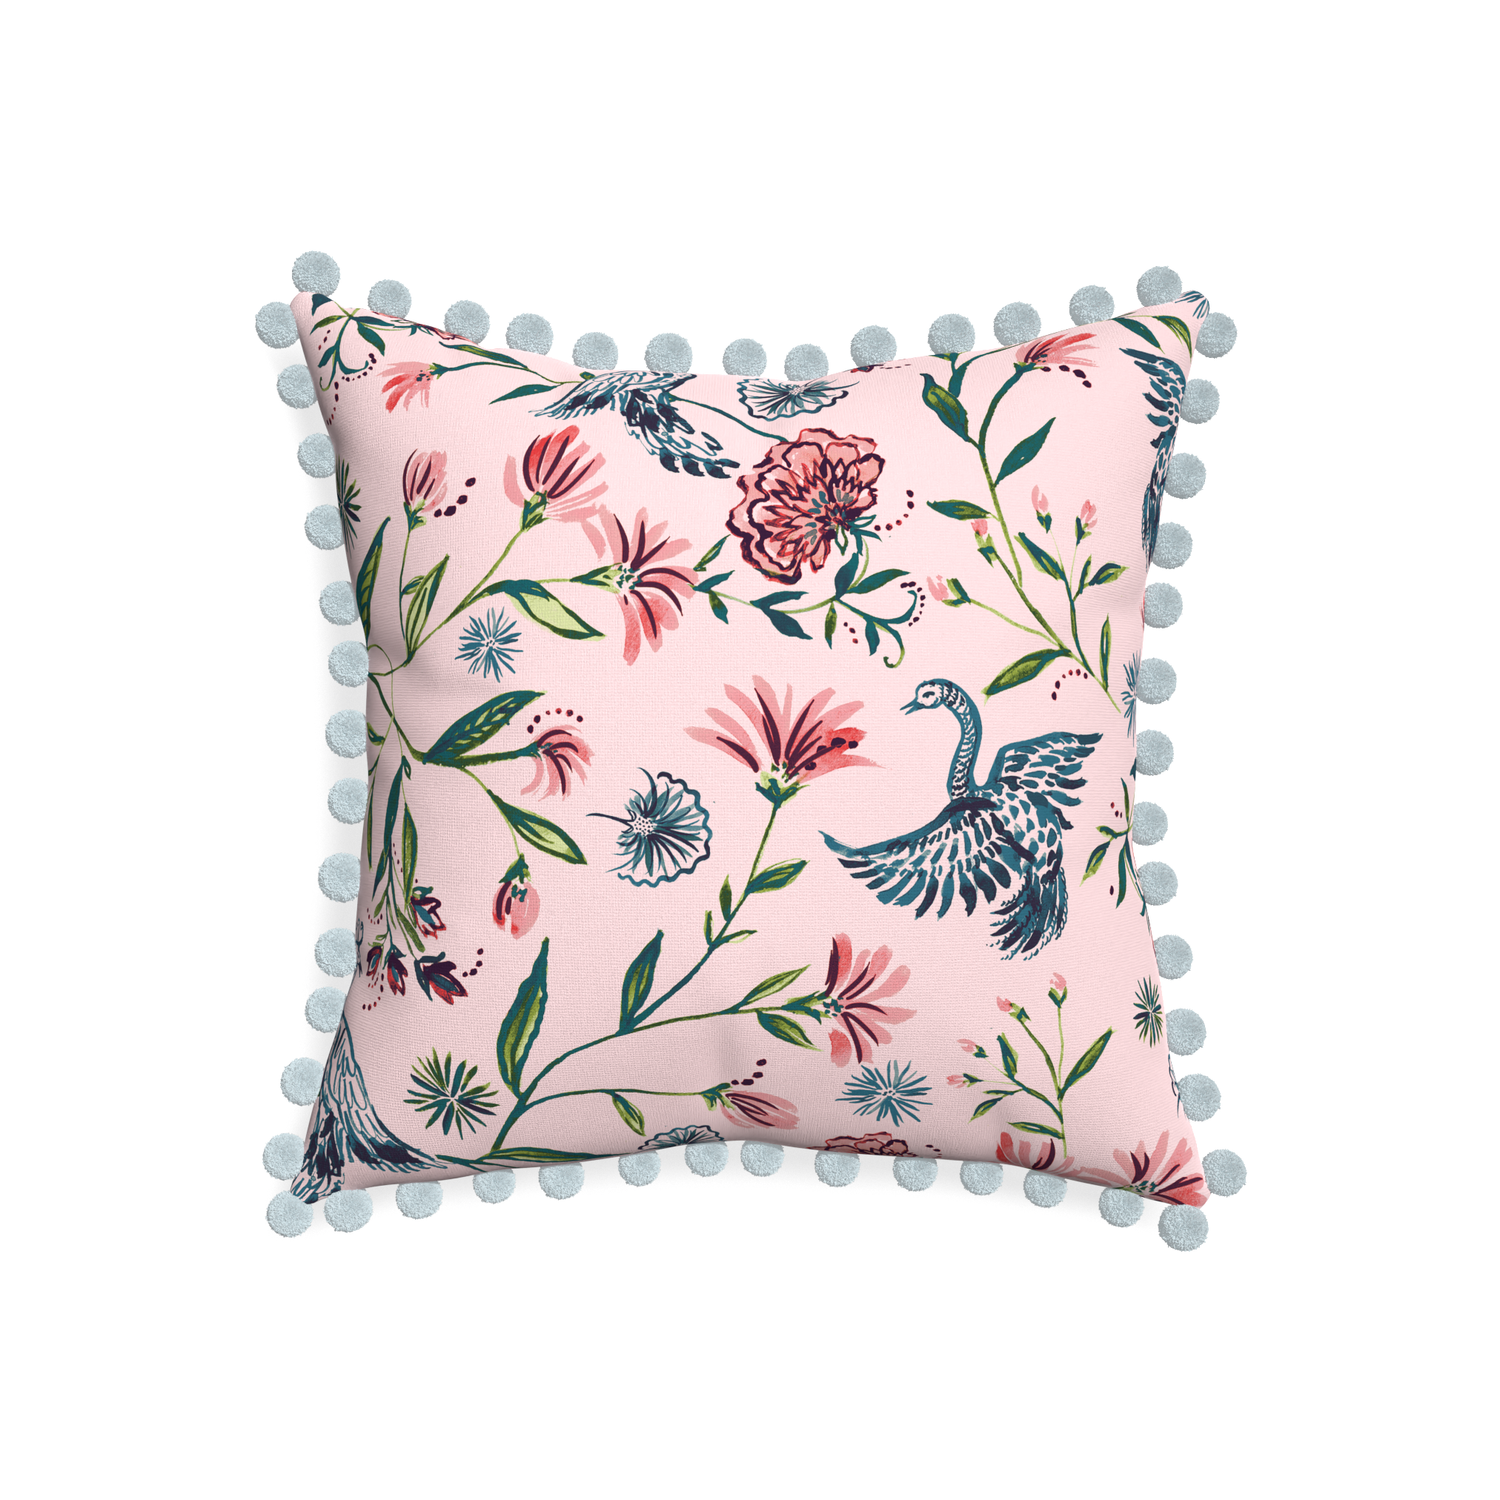 20-square daphne rose custom pillow with powder pom pom on white background